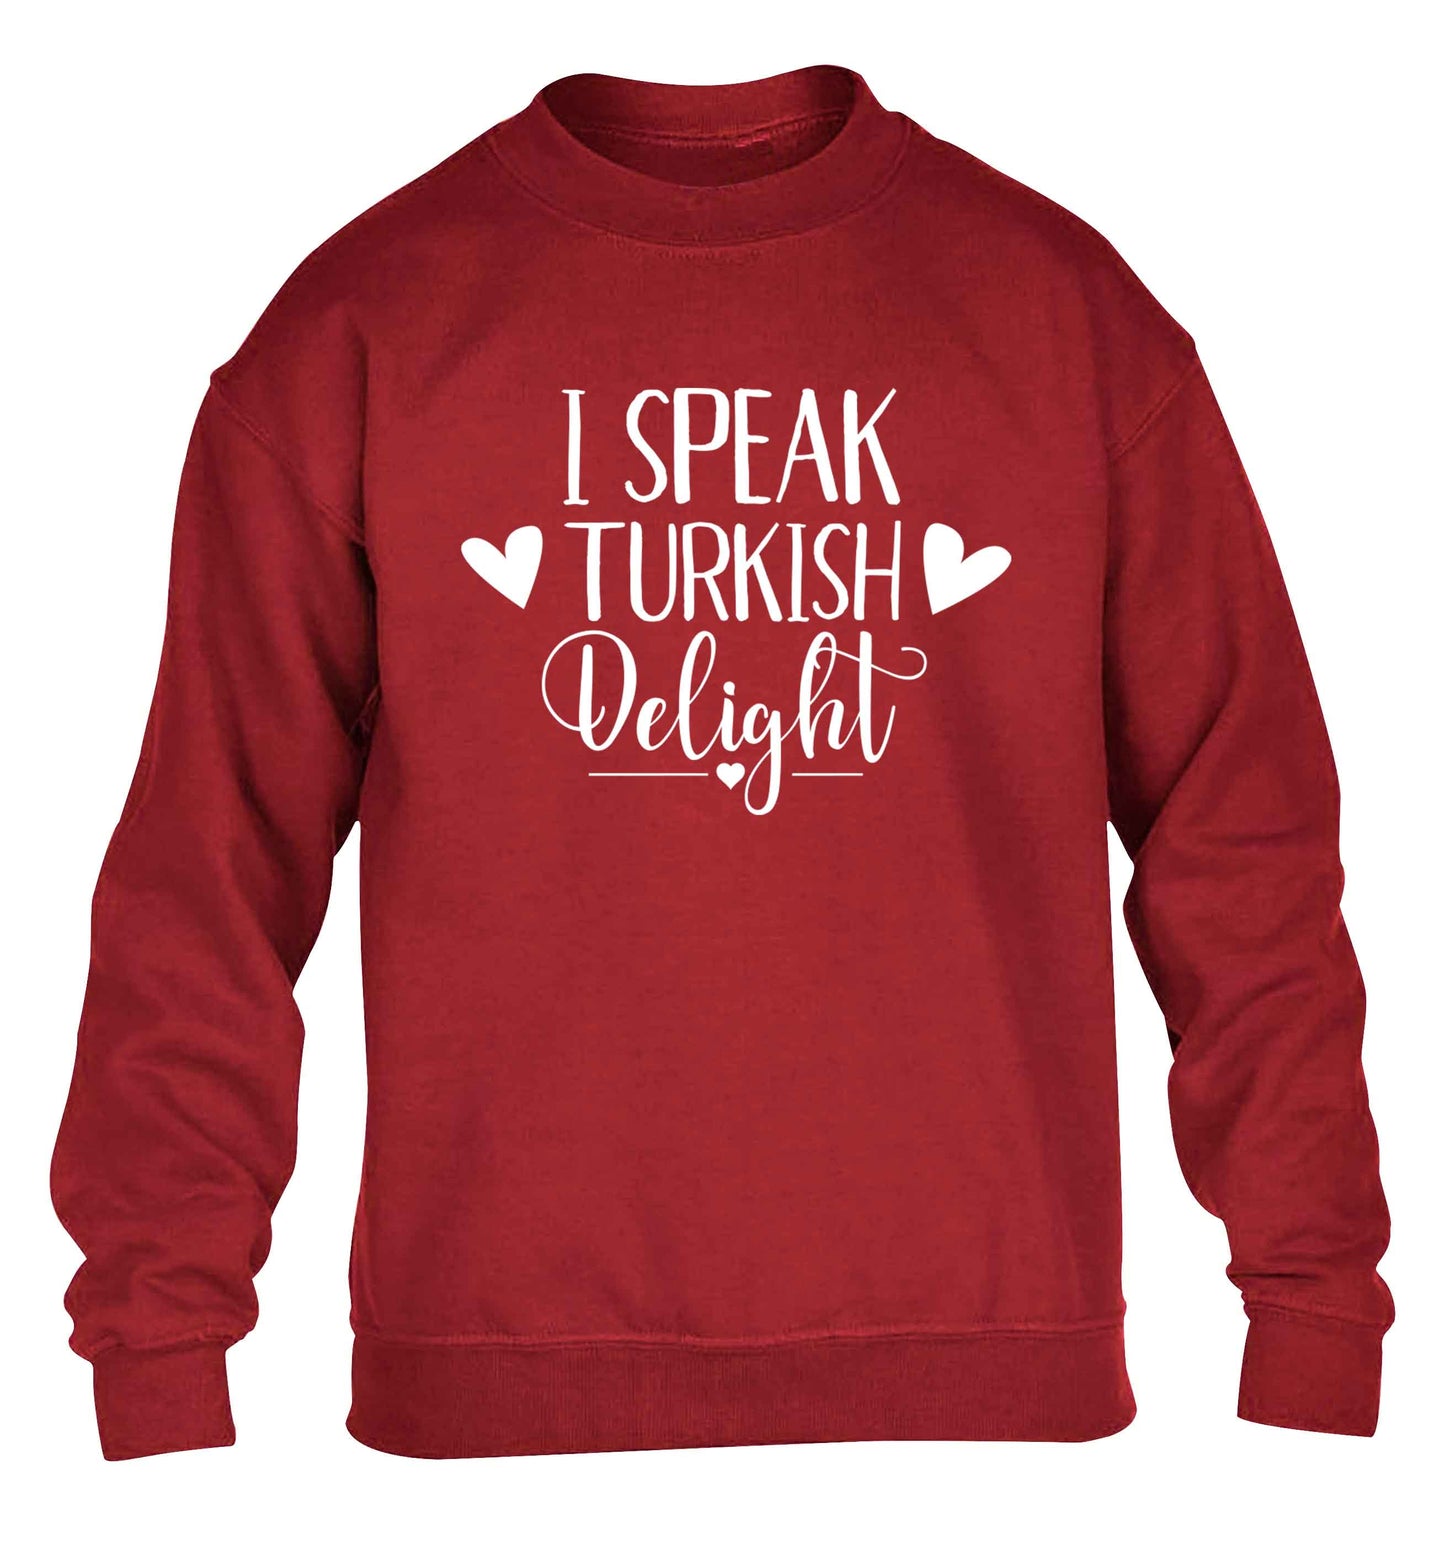 I speak turkish...delight children's grey sweater 12-13 Years